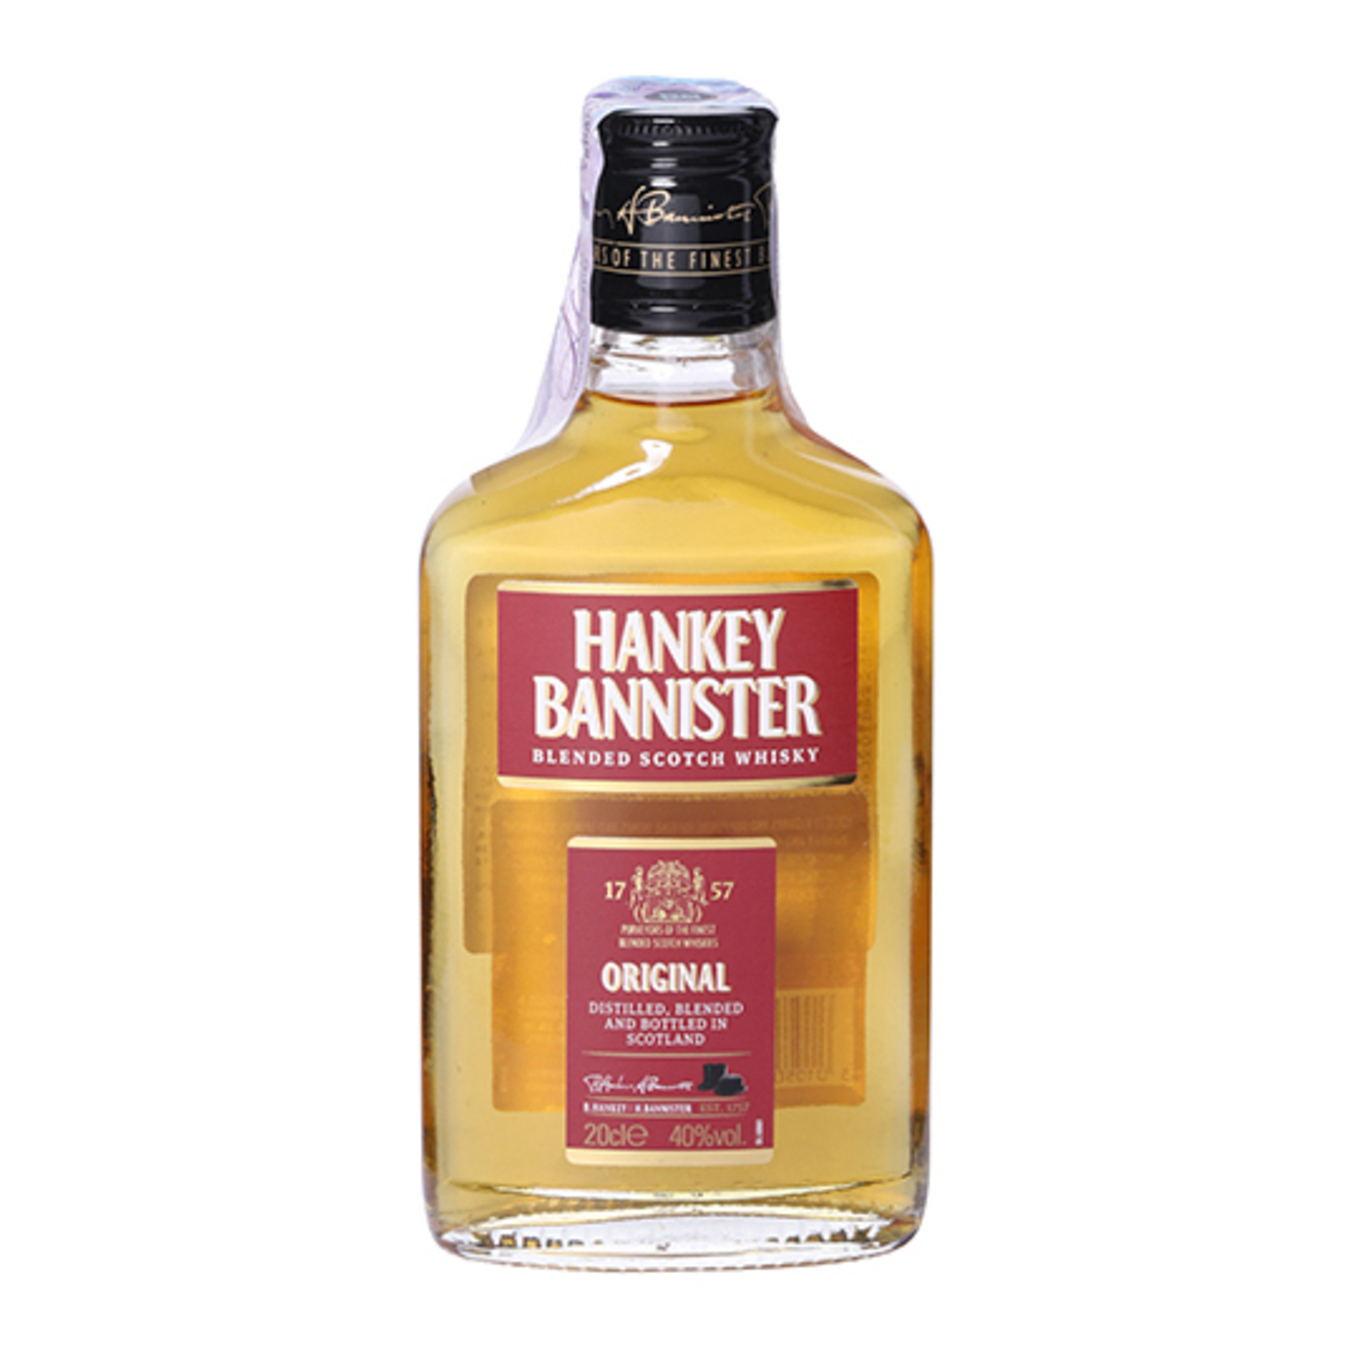 Whisky Hankey Bannister 3 yrears 40% 0,2l